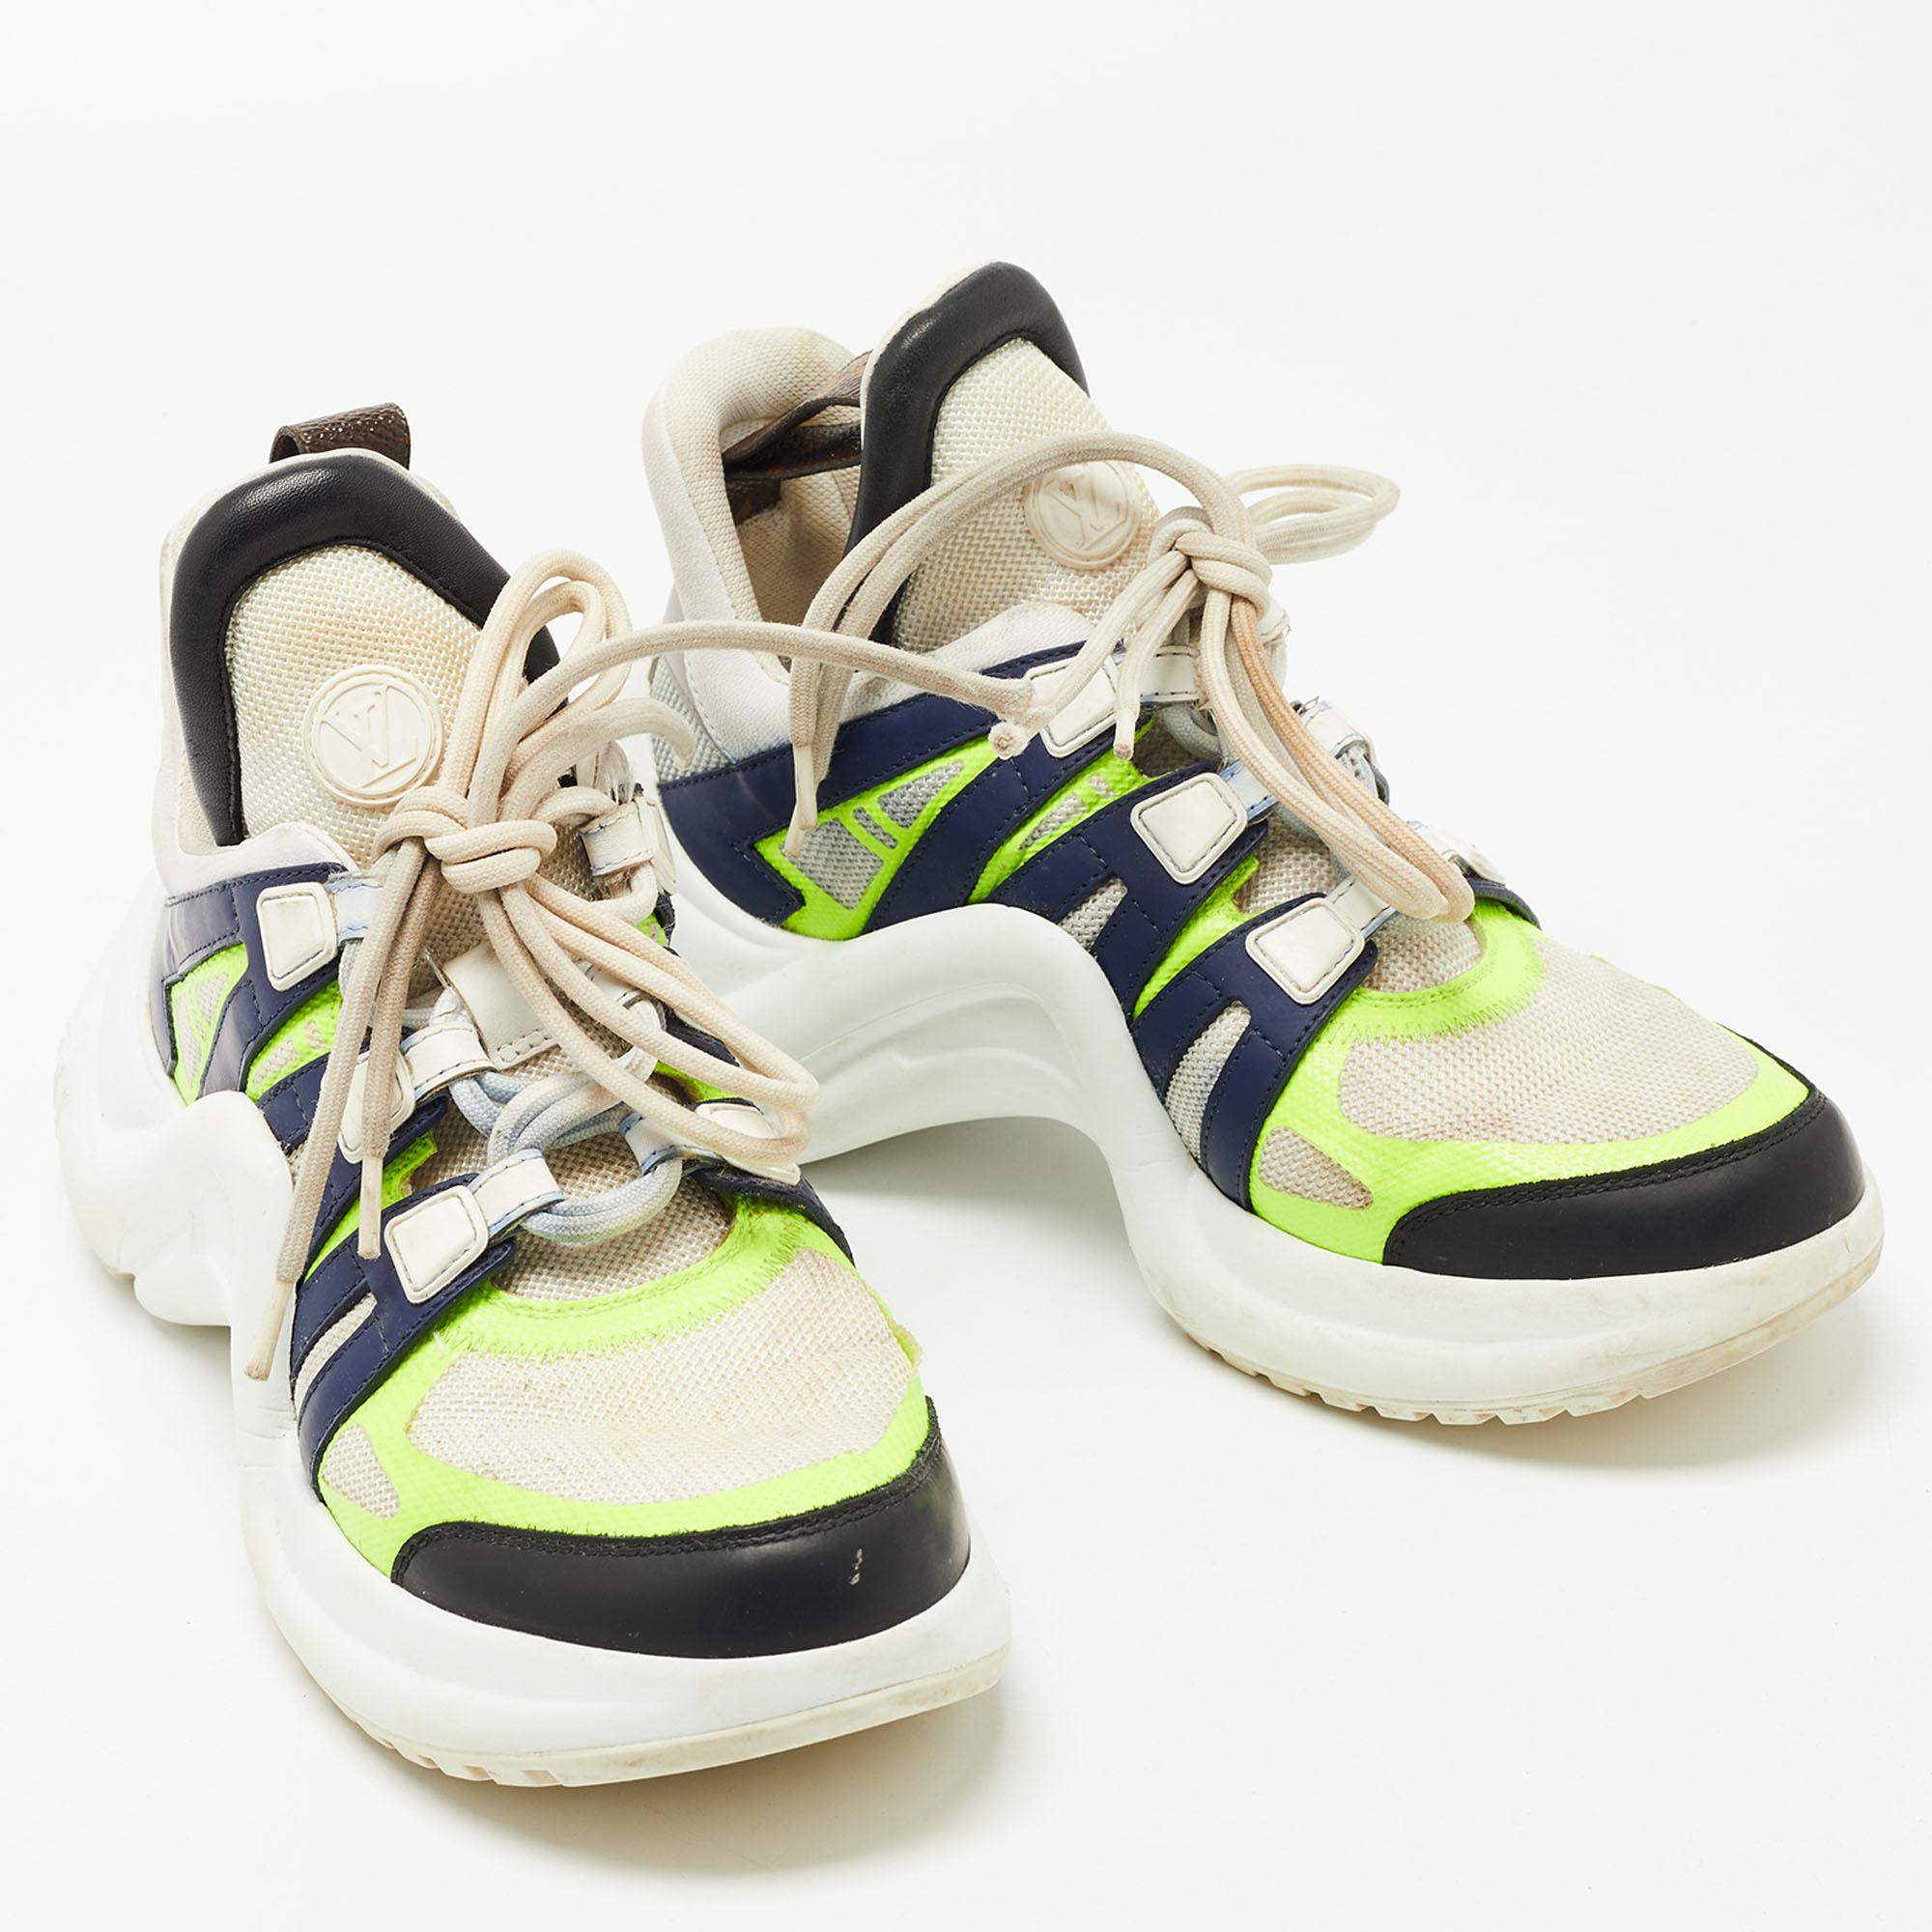 Louis Vuitton Multicolor Leather Archlight Sneakers Size 37.5 4